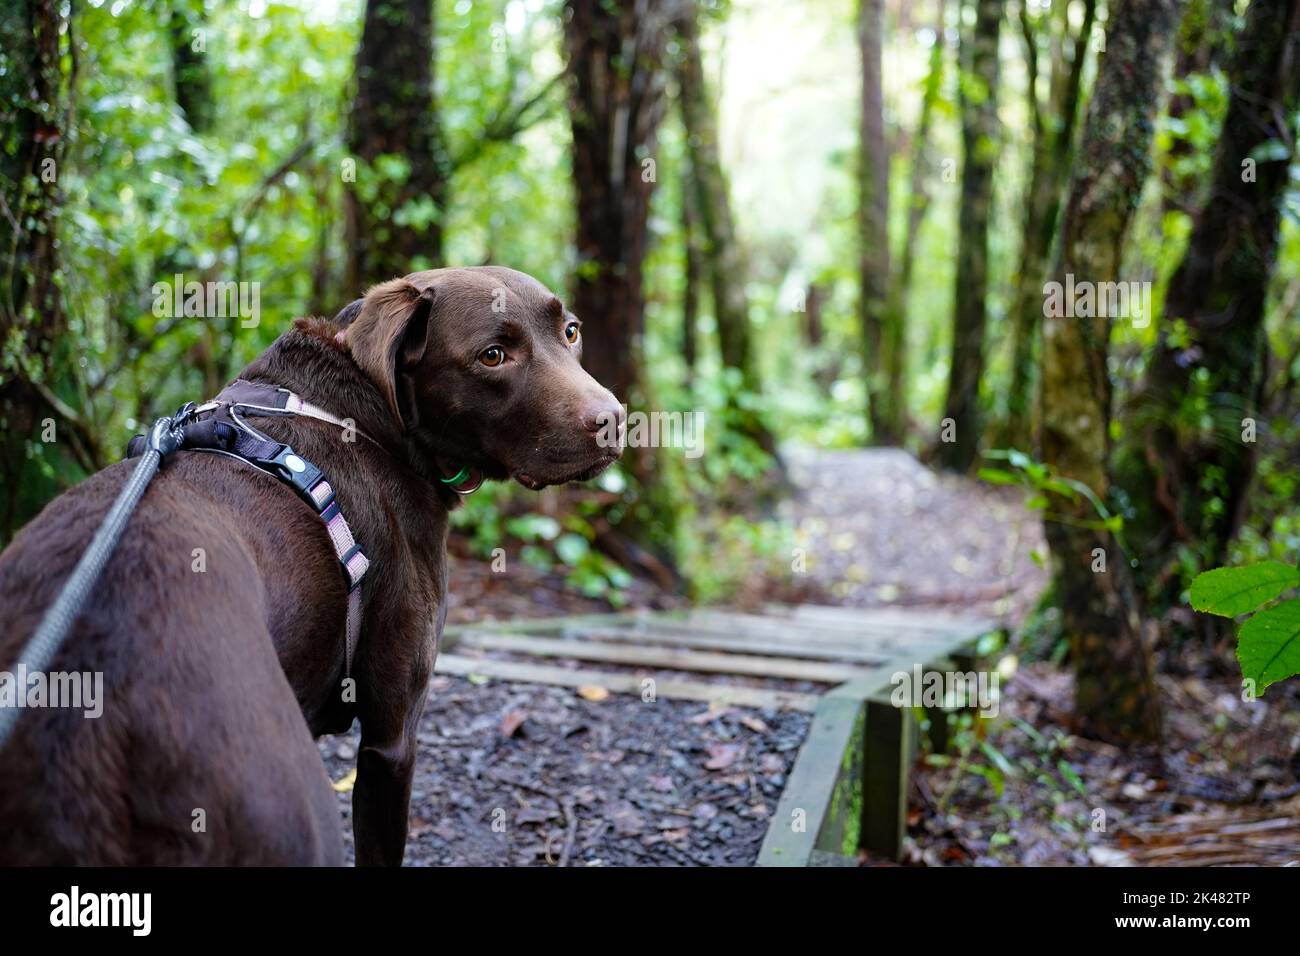 Walking a chocolate labrador dog through a forest Stock Photo